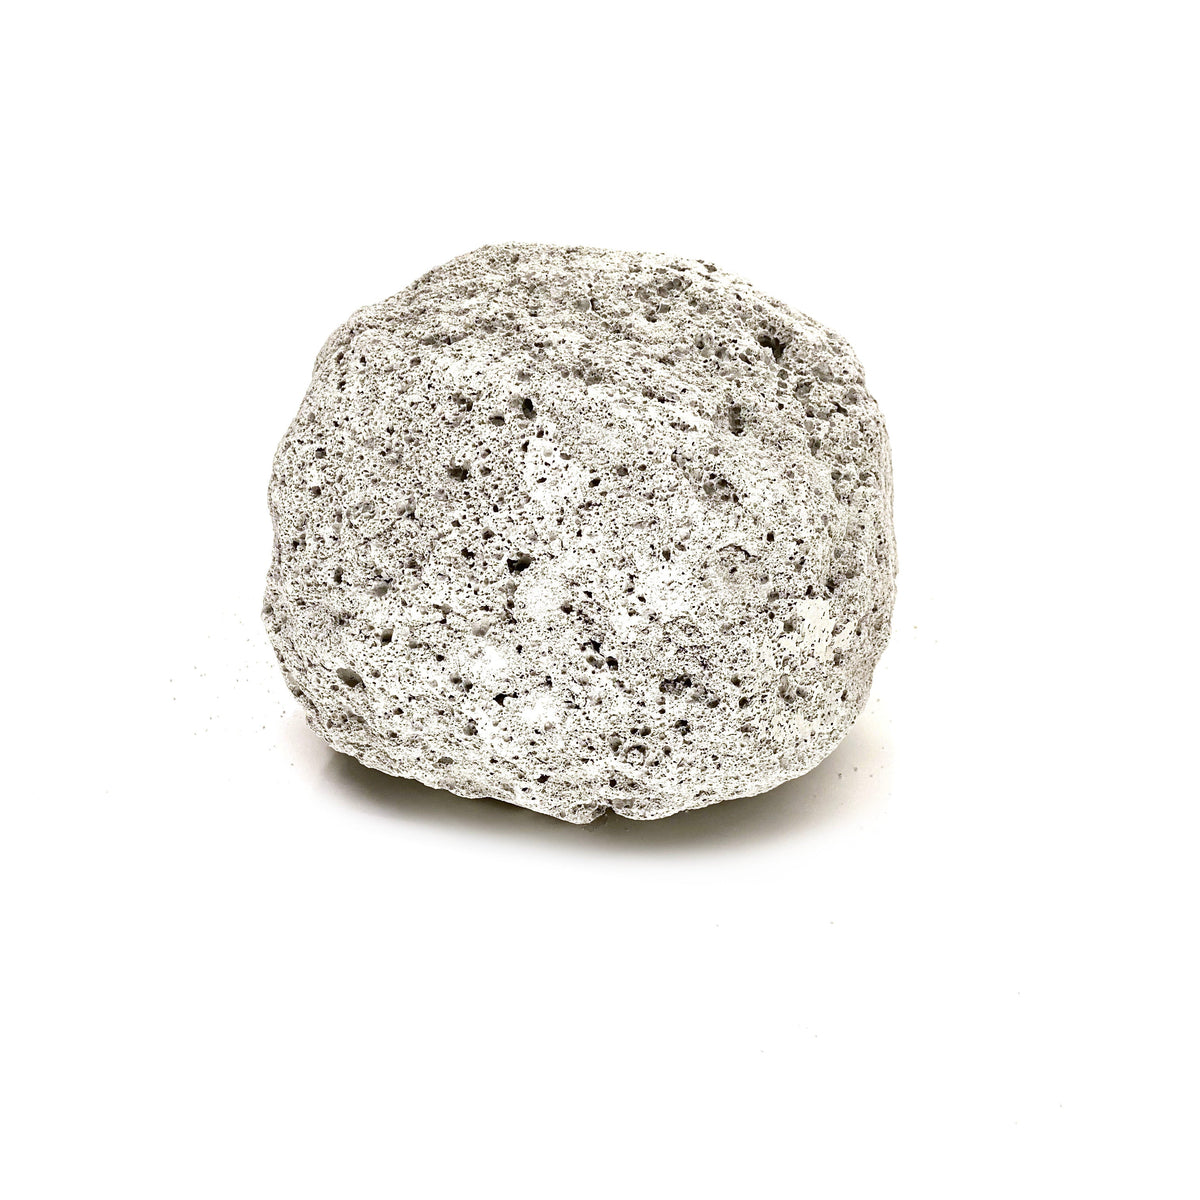 SMASHProps Breakaway Stone Rock Smashable Stunt Prop - GREY - Grey